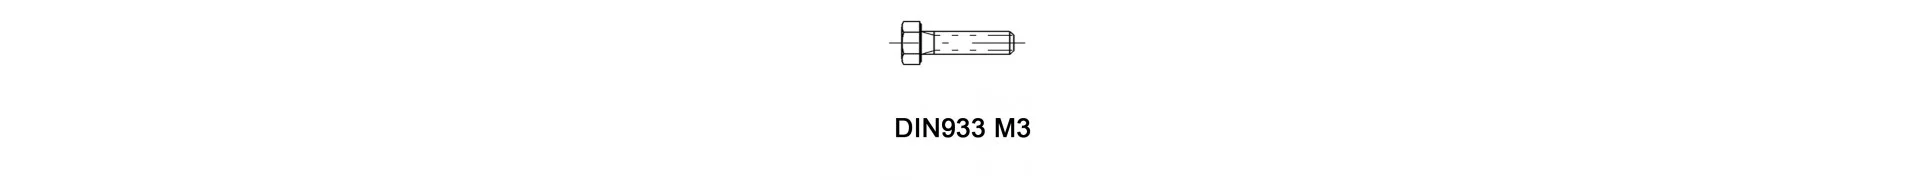 DIN933 M3